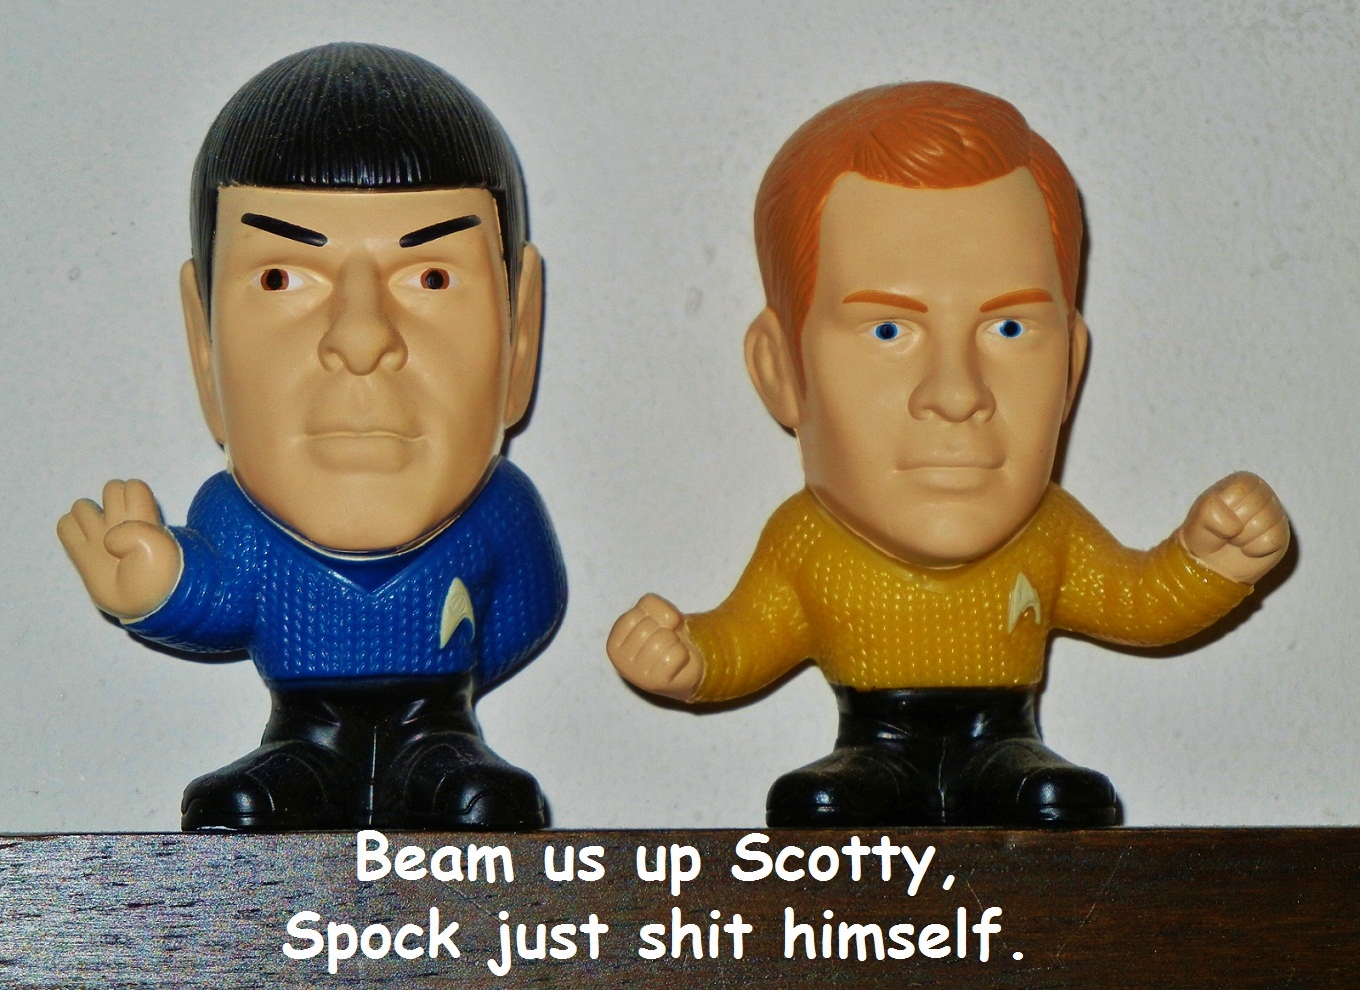 Spocks a fool